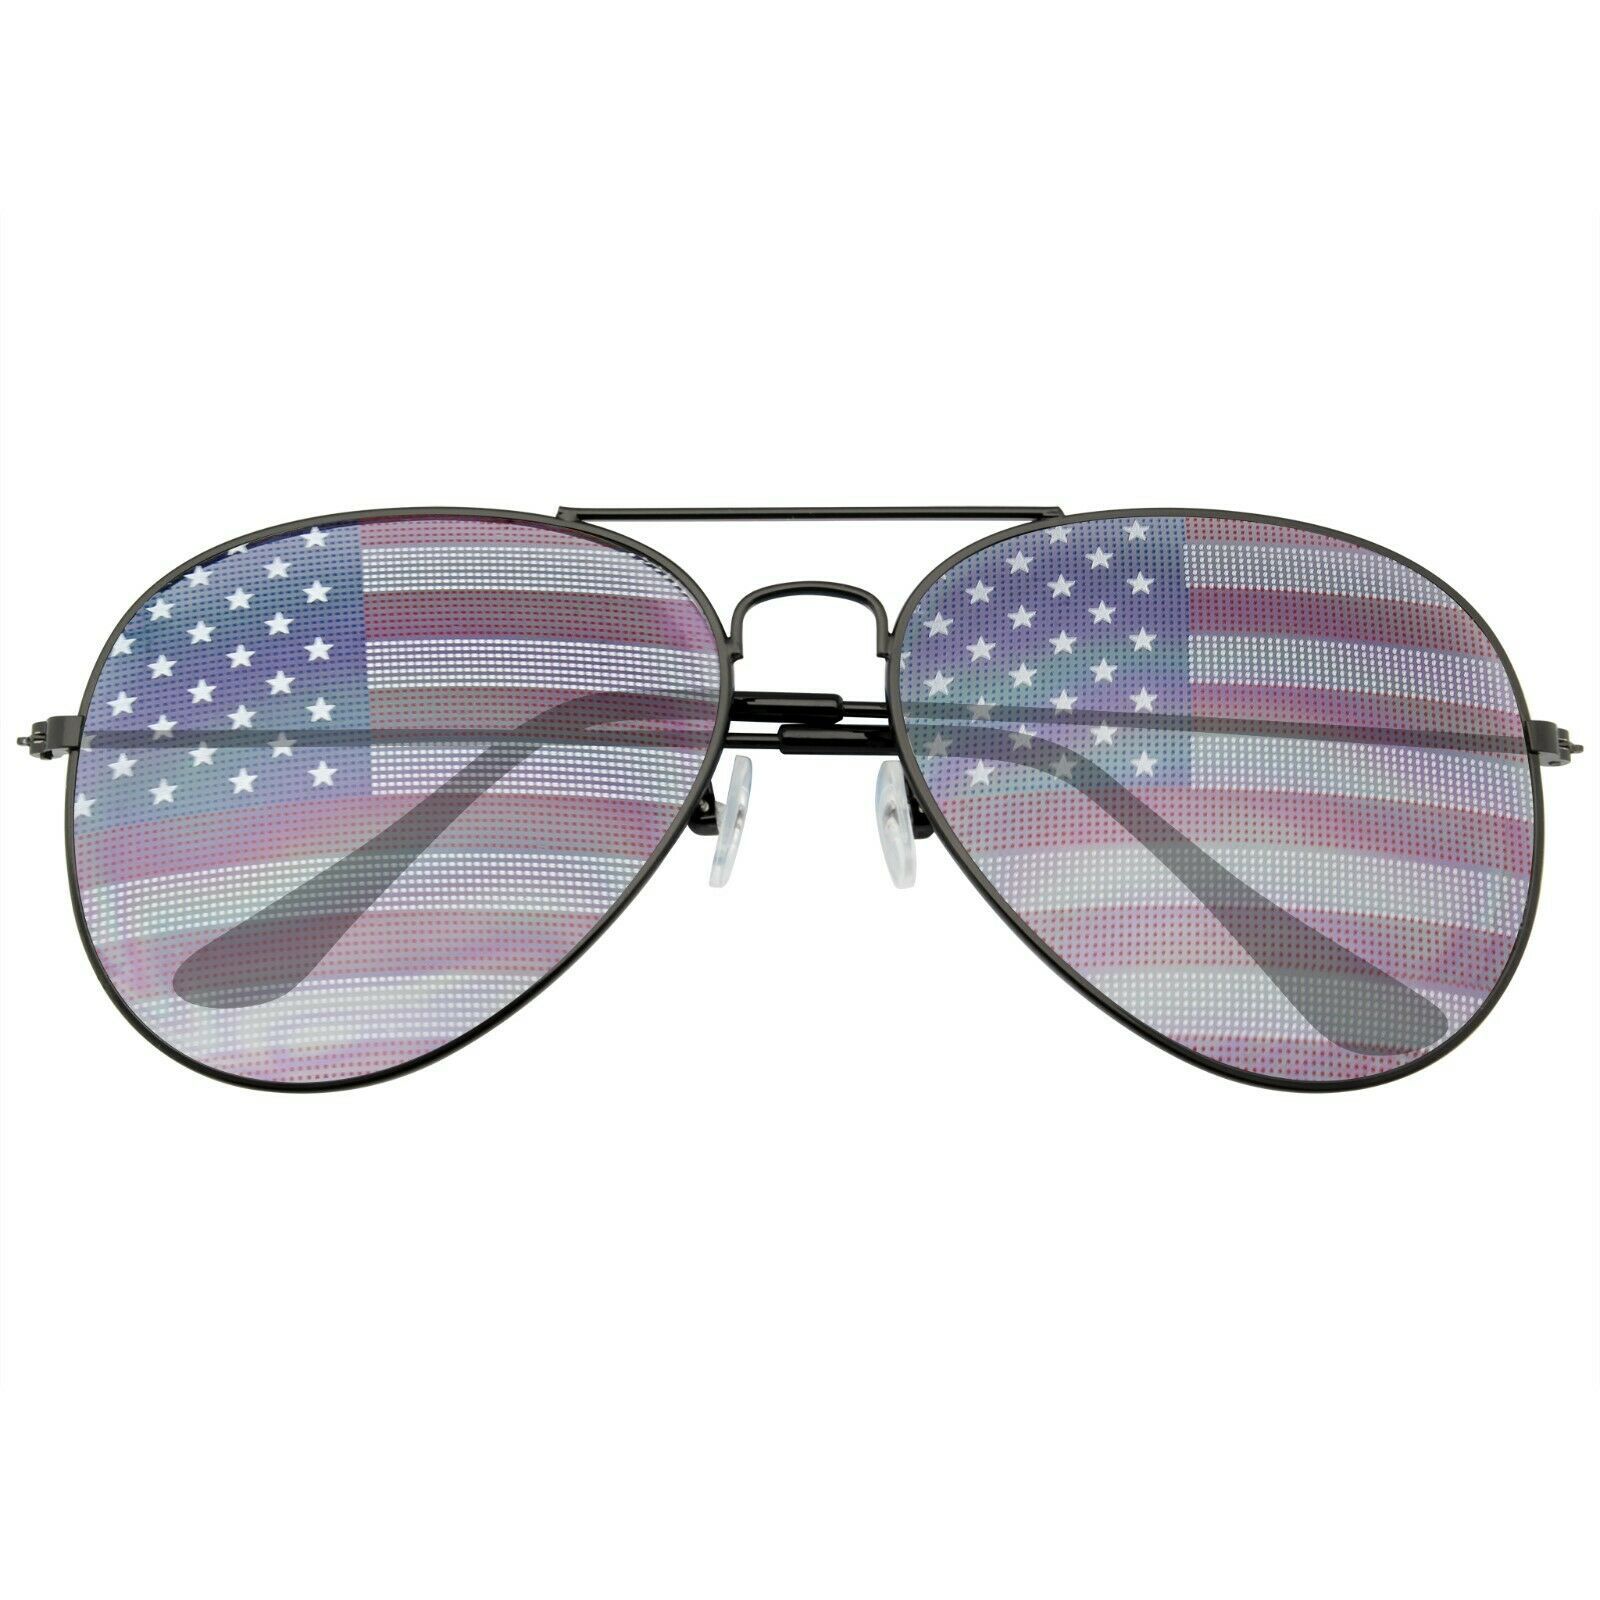 Sunglasses Mens Womens Retro Vintage Party Festival Patriotic American Flag CASE